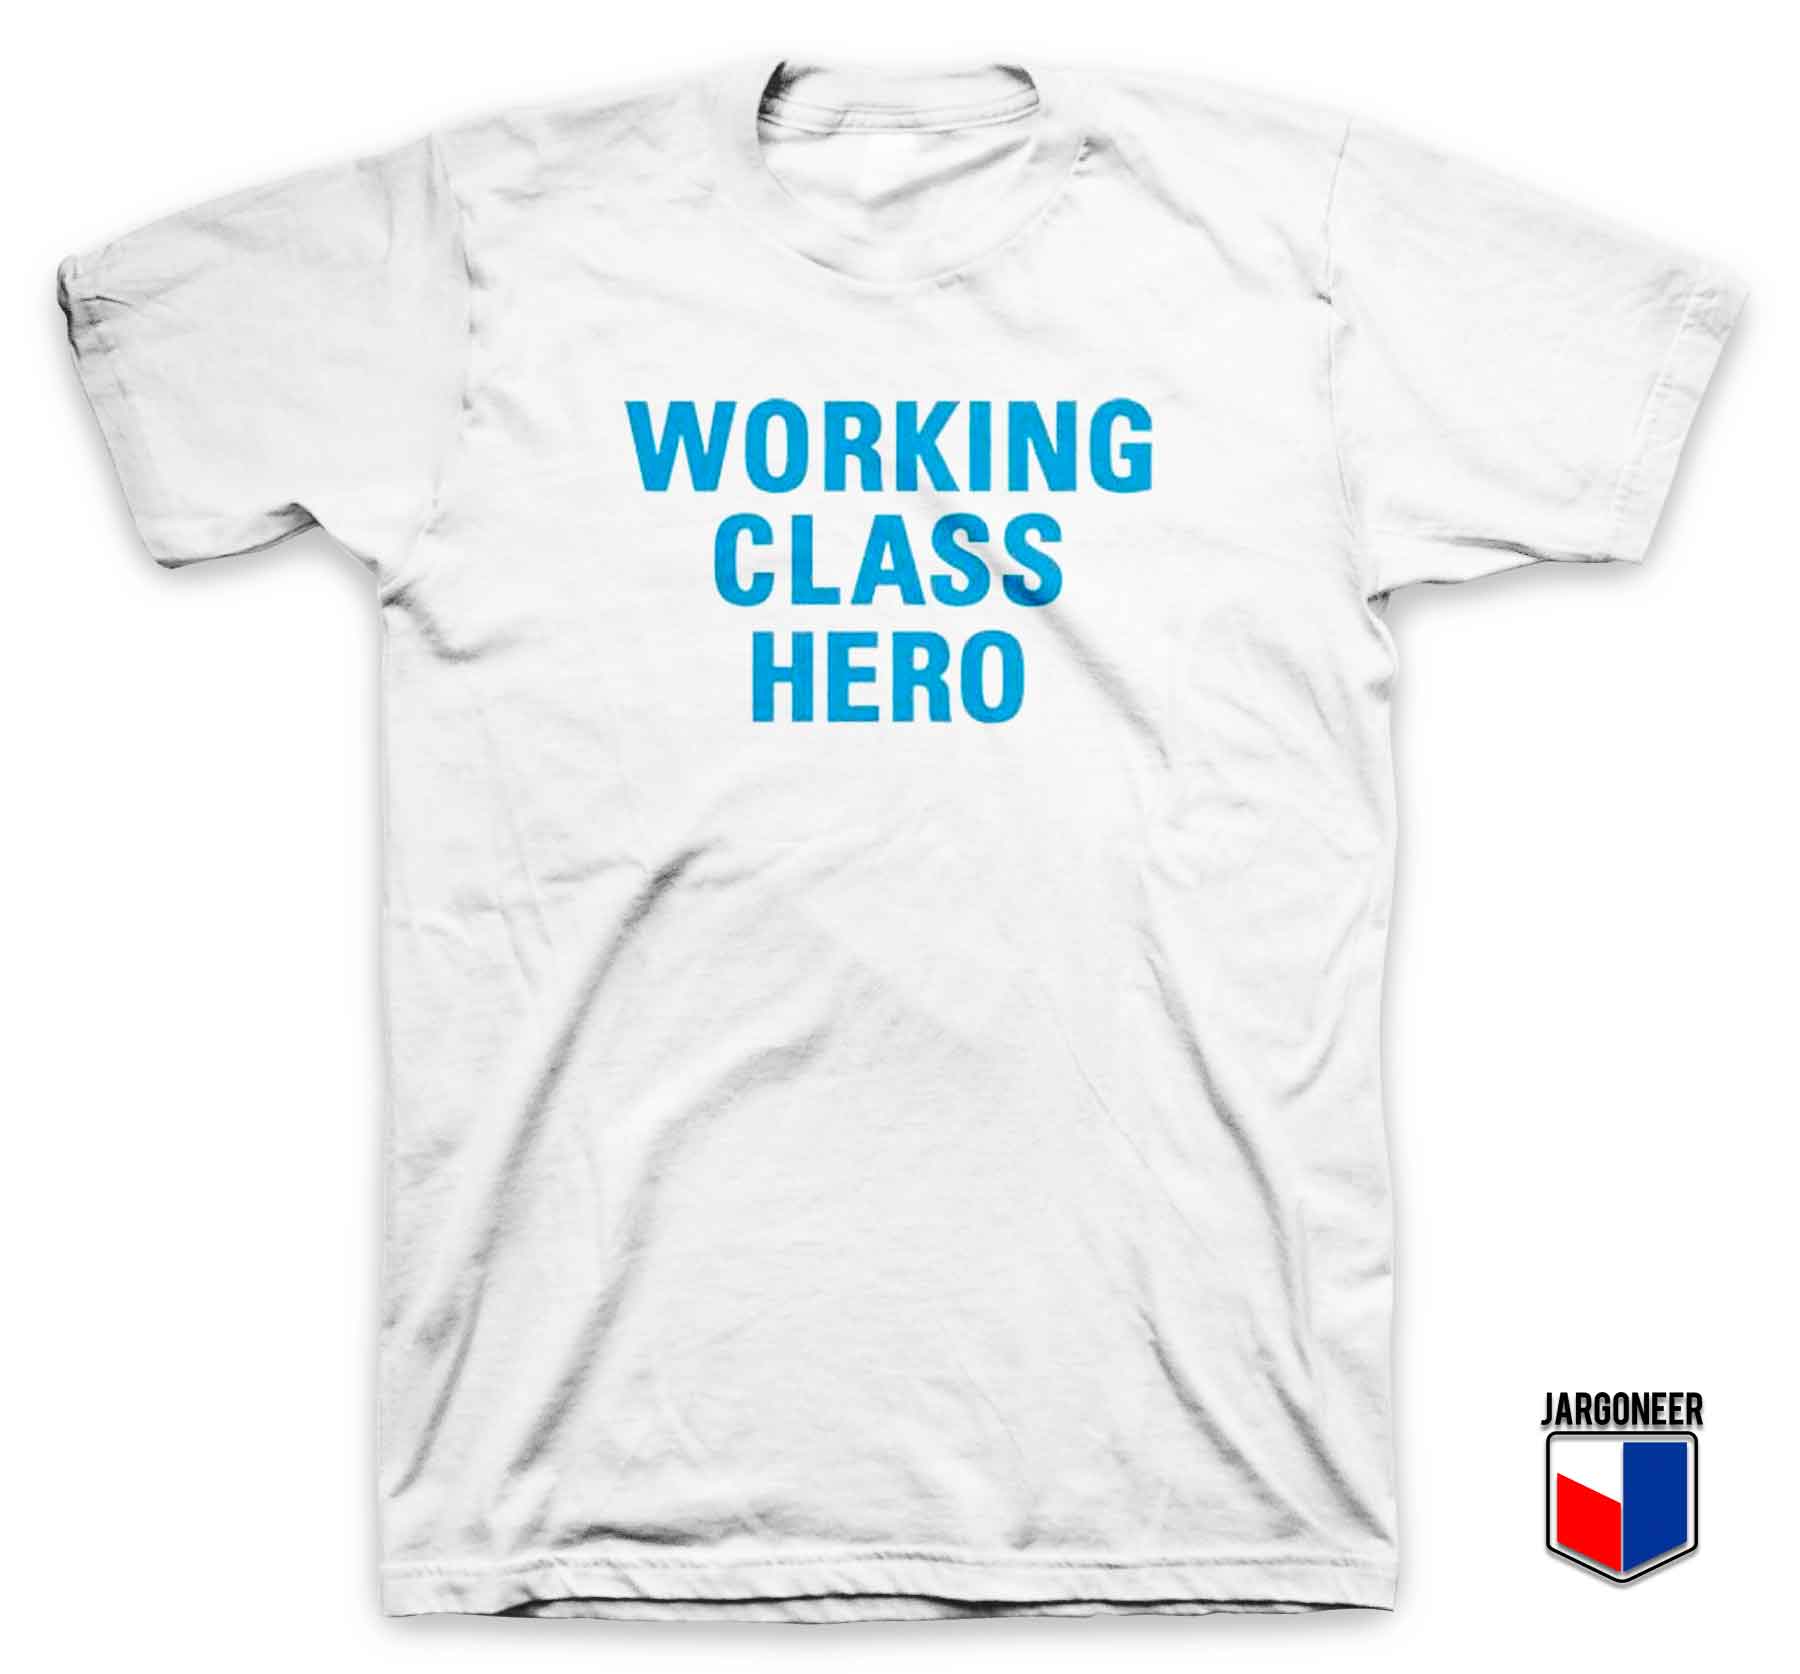 Working Class Hero T Shirt - Shop Unique Graphic Cool Shirt Designs